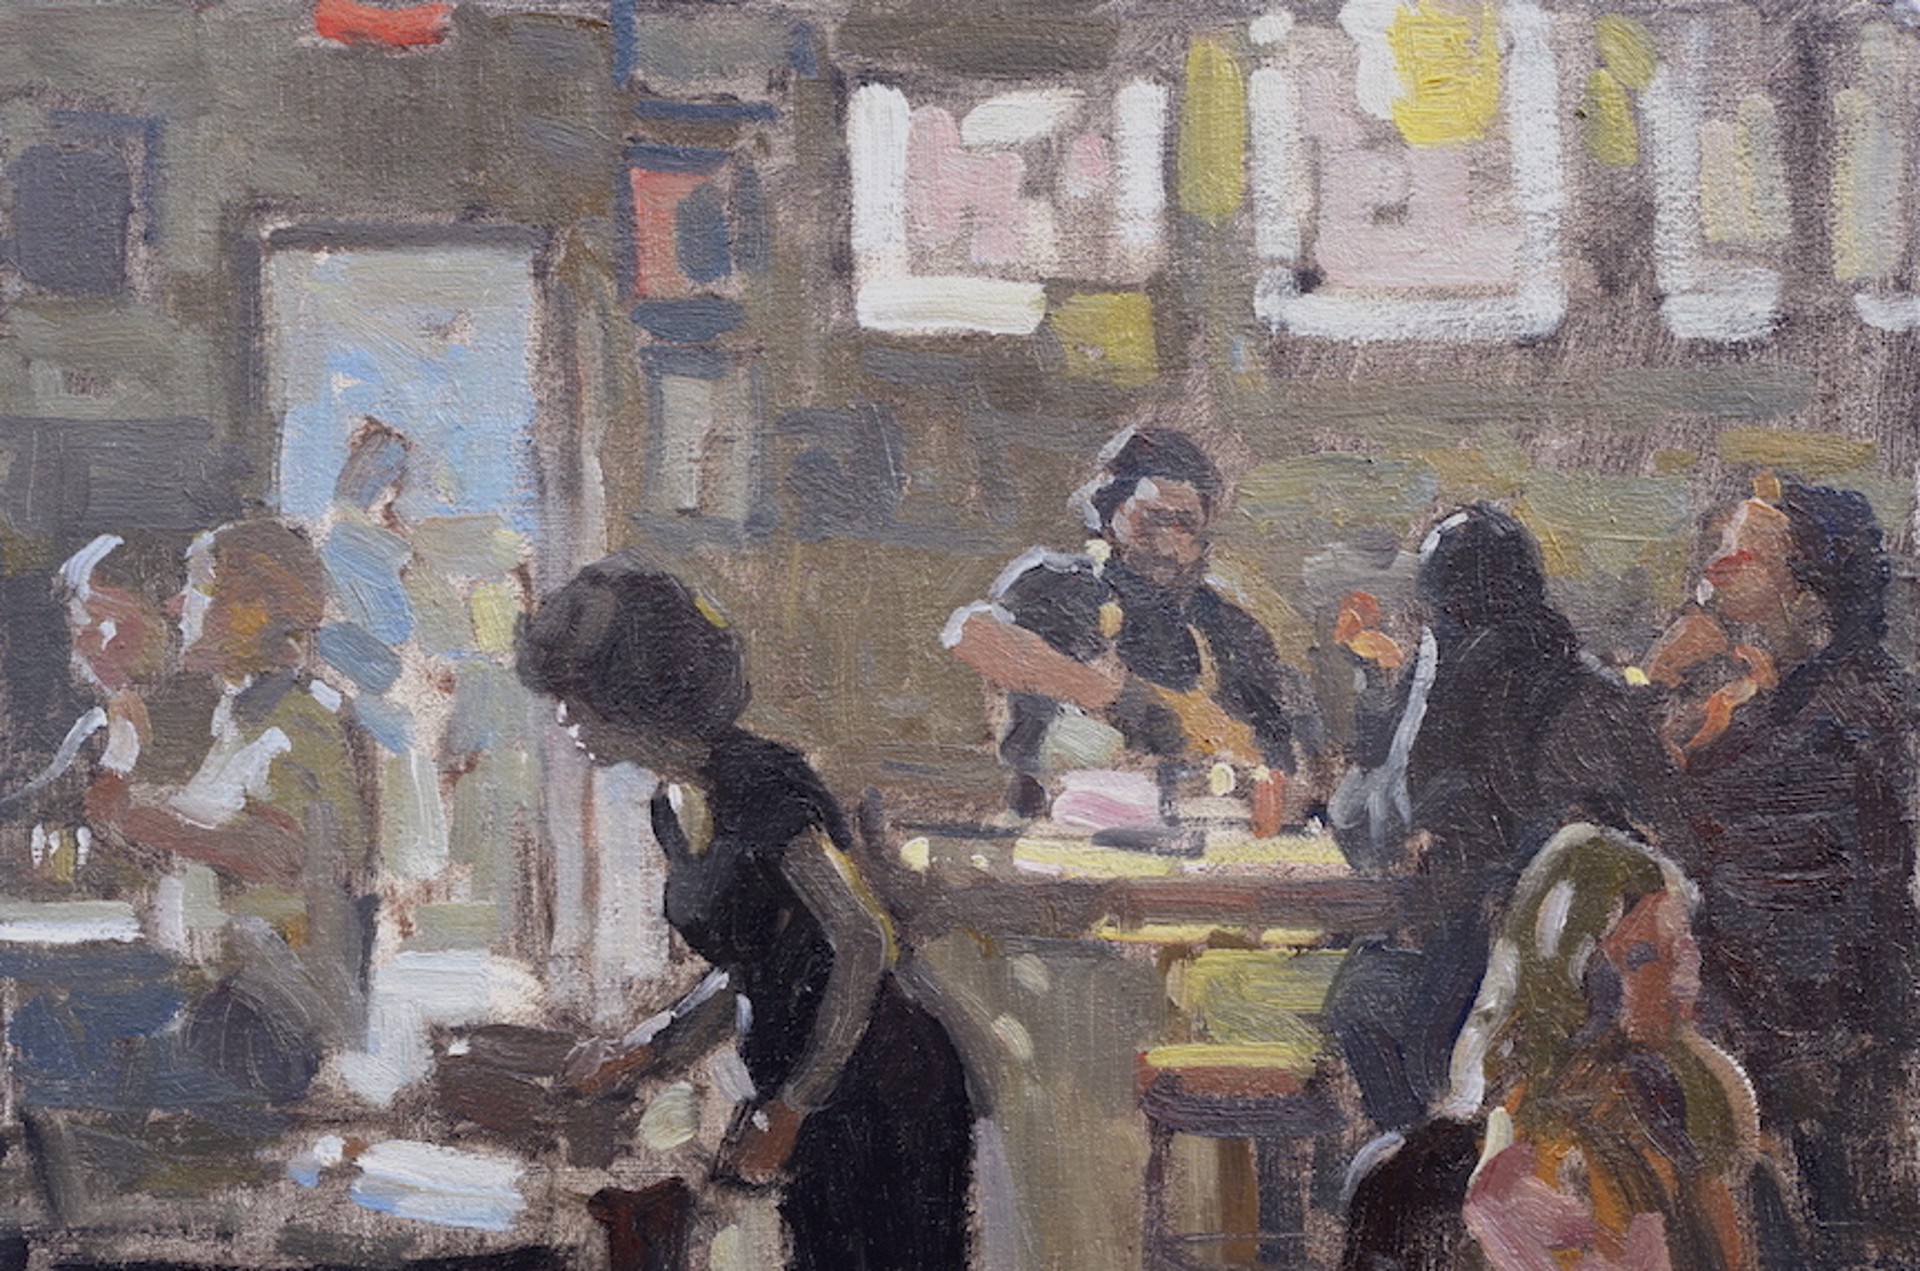 Leon's Oyster Bar by John C. Traynor